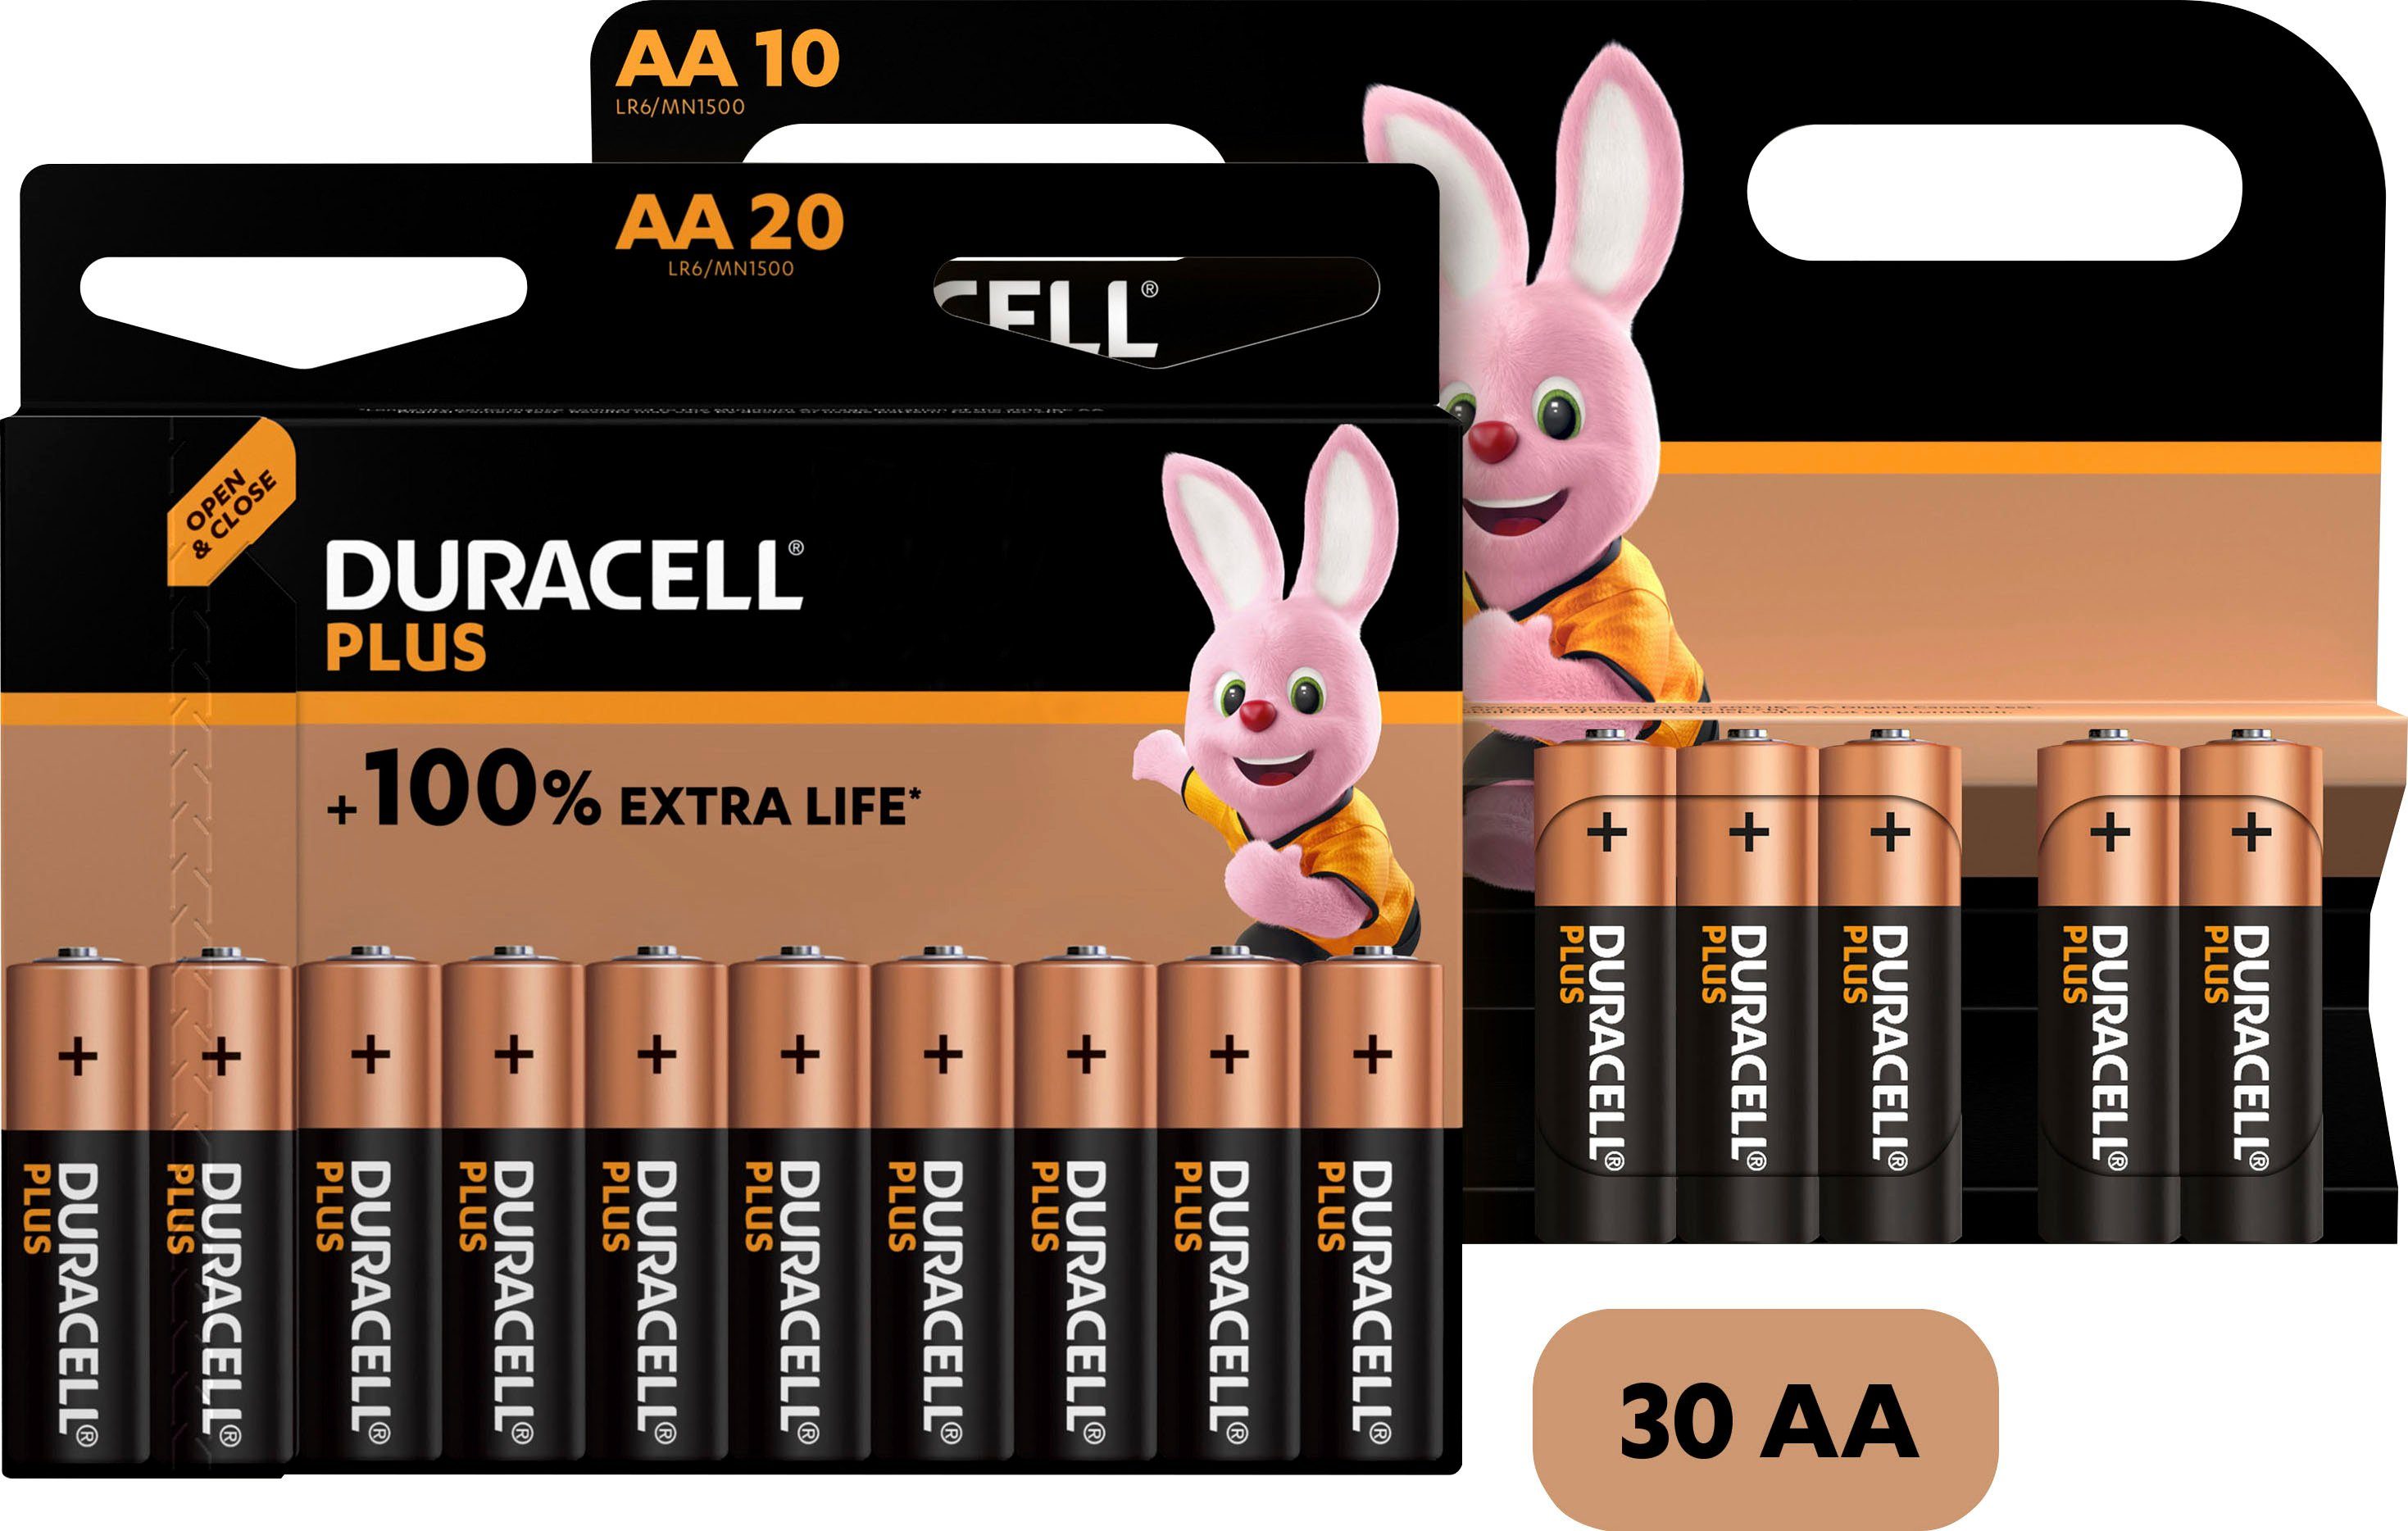 Duracell »20+10 Pack: 30x Mignon/AA/LR06« Batterie, LR06 (30 St), 1,5V  online kaufen | OTTO